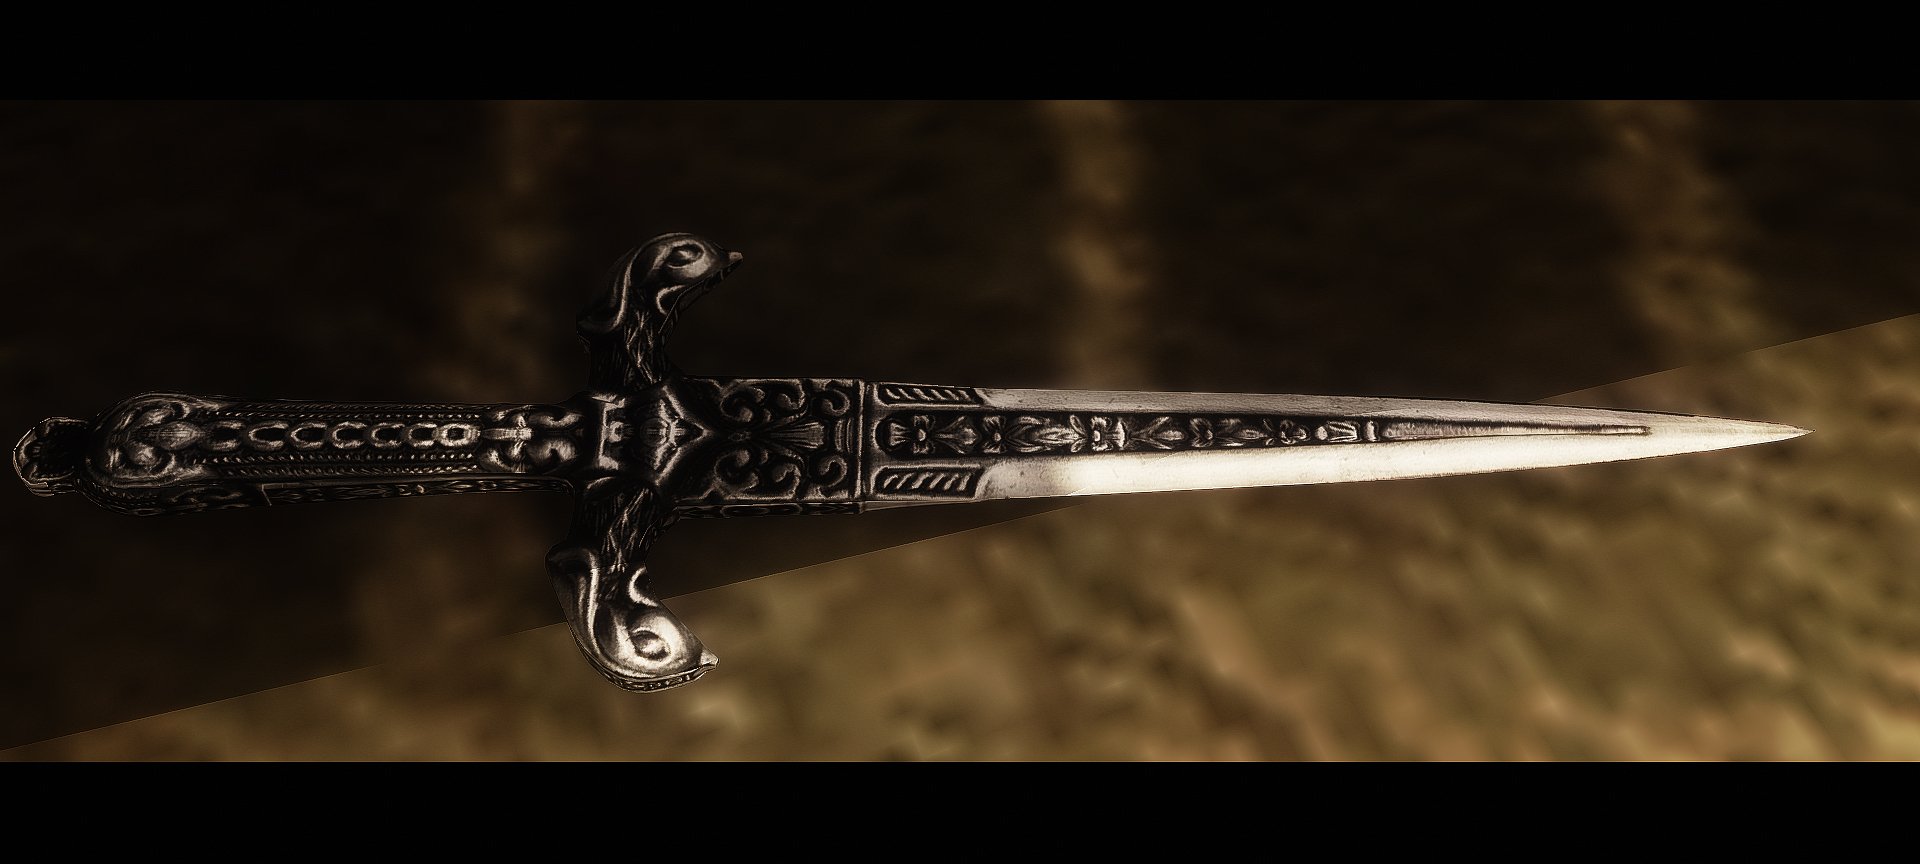 Nexus Mods på Twitter: "The high quality "Elven Silver Daggers&qu...